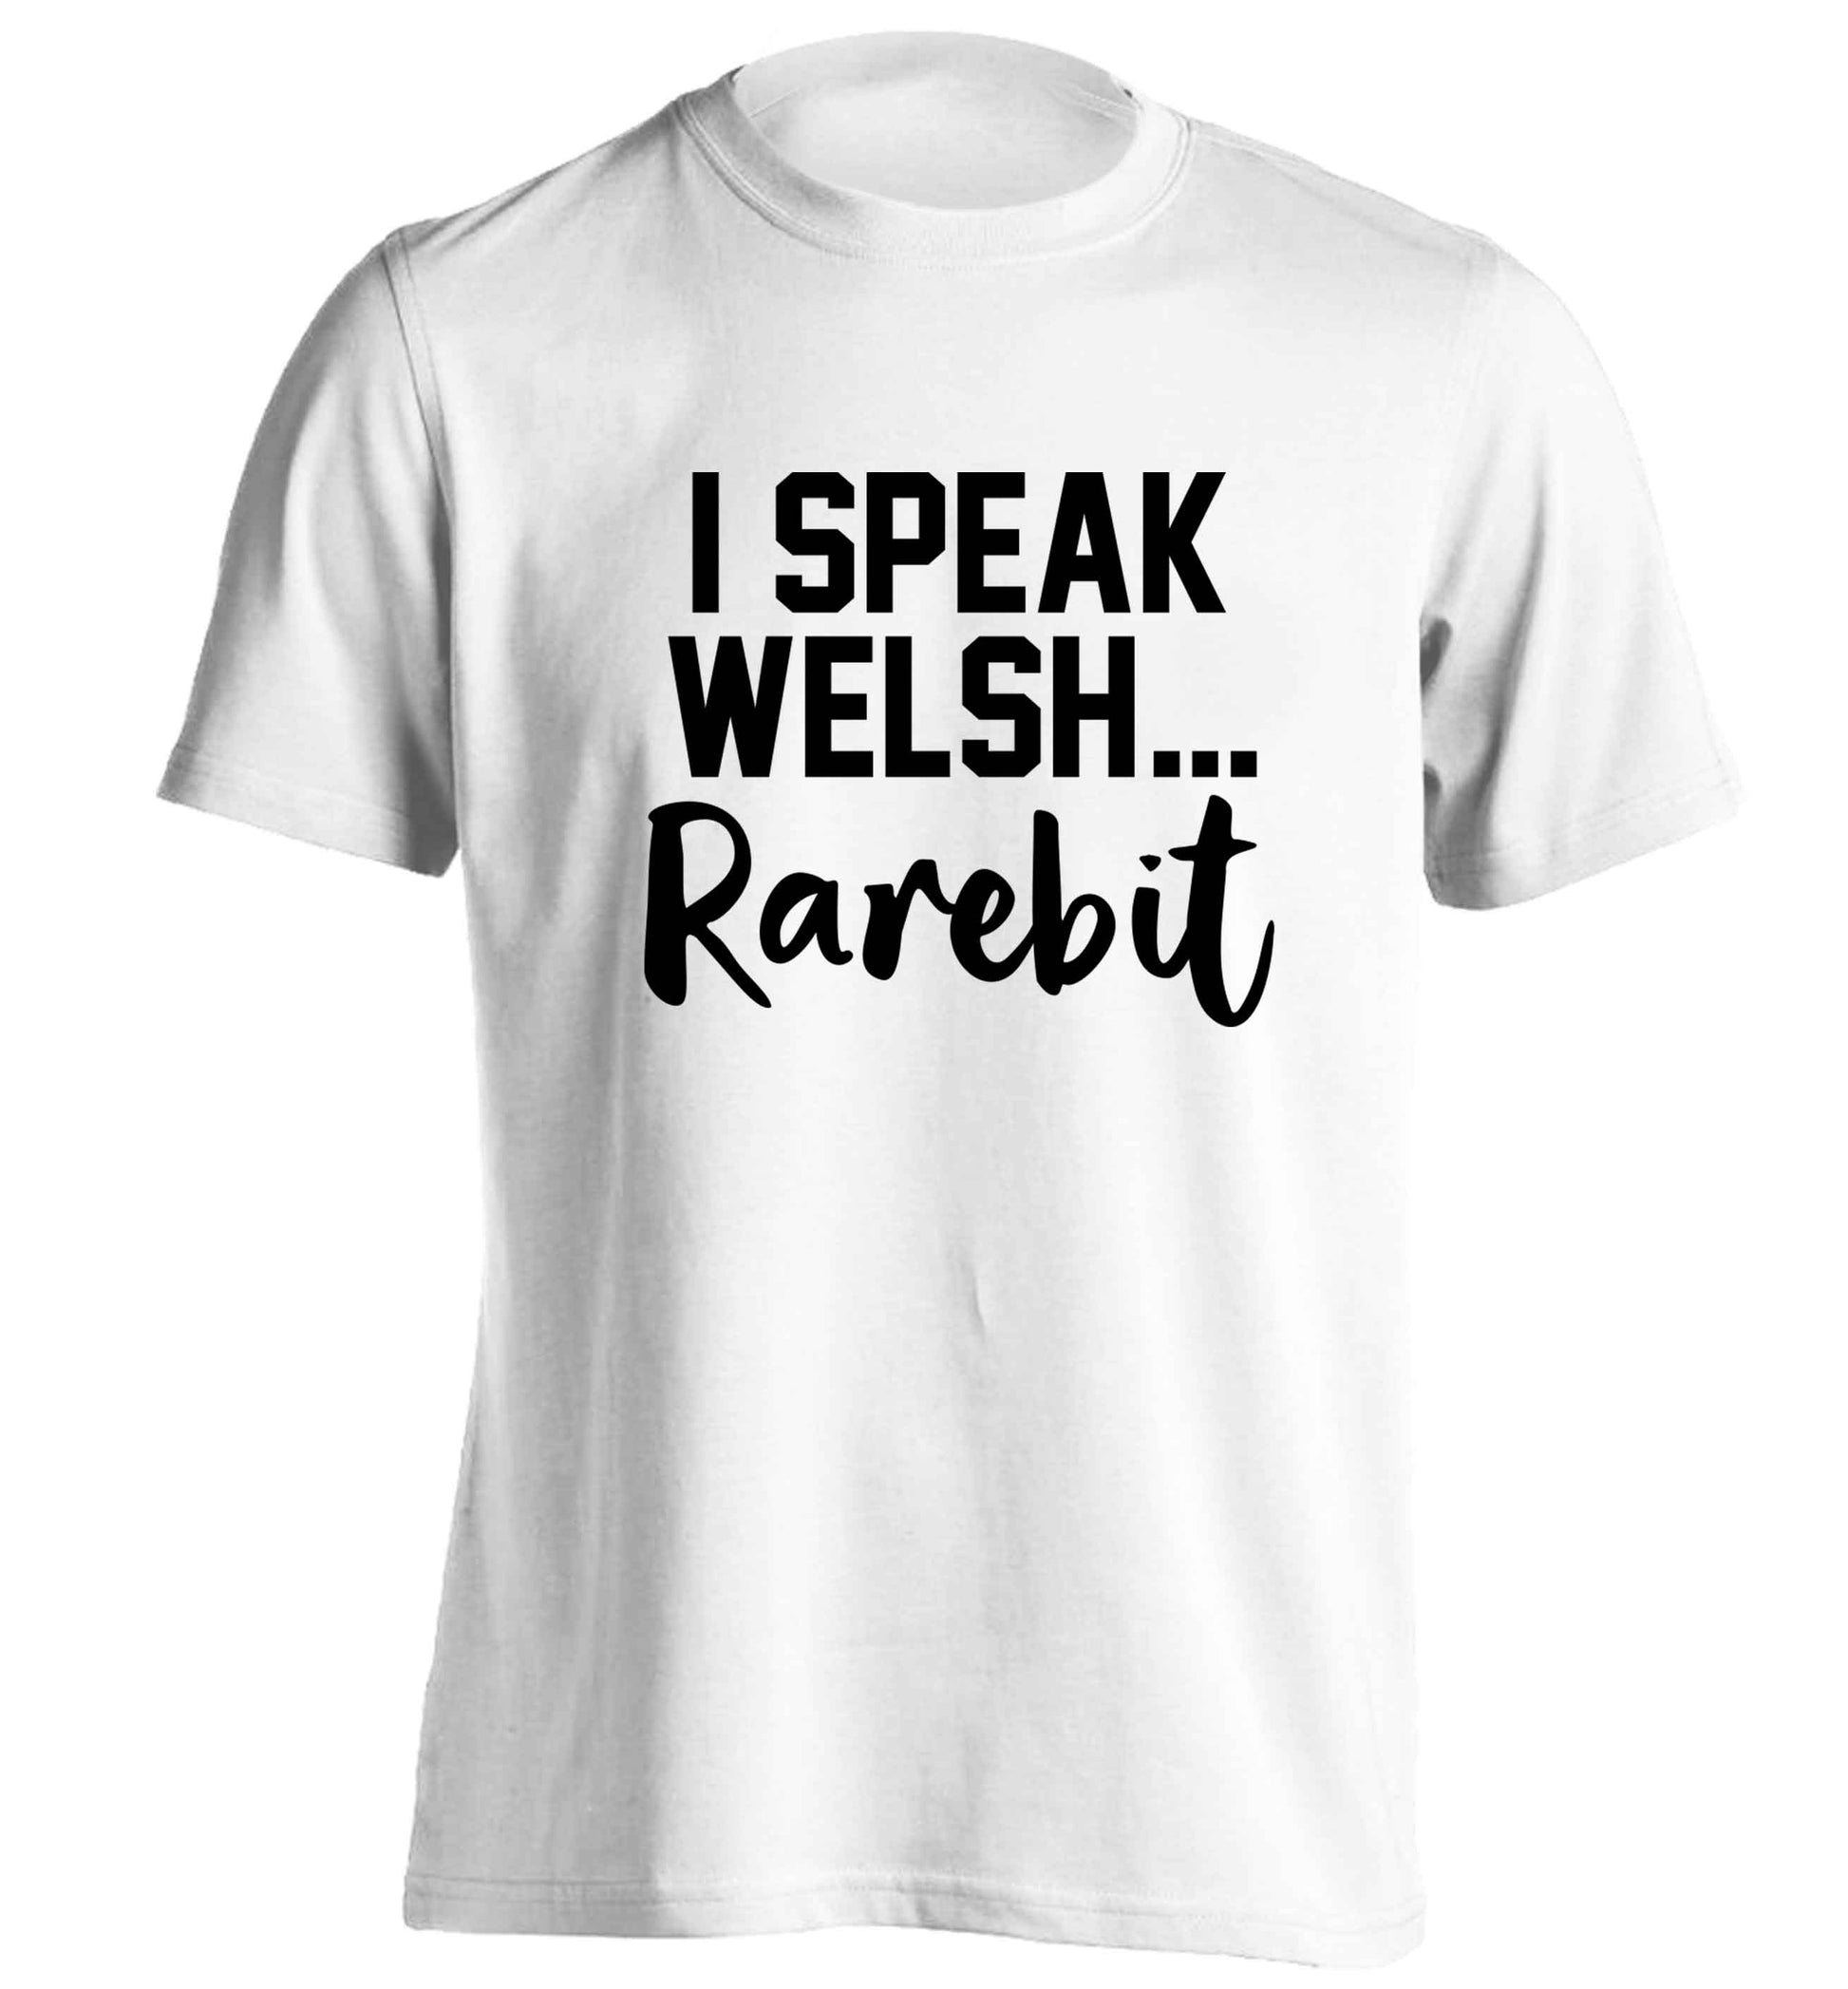 I speak Welsh...rarebit adults unisex white Tshirt 2XL